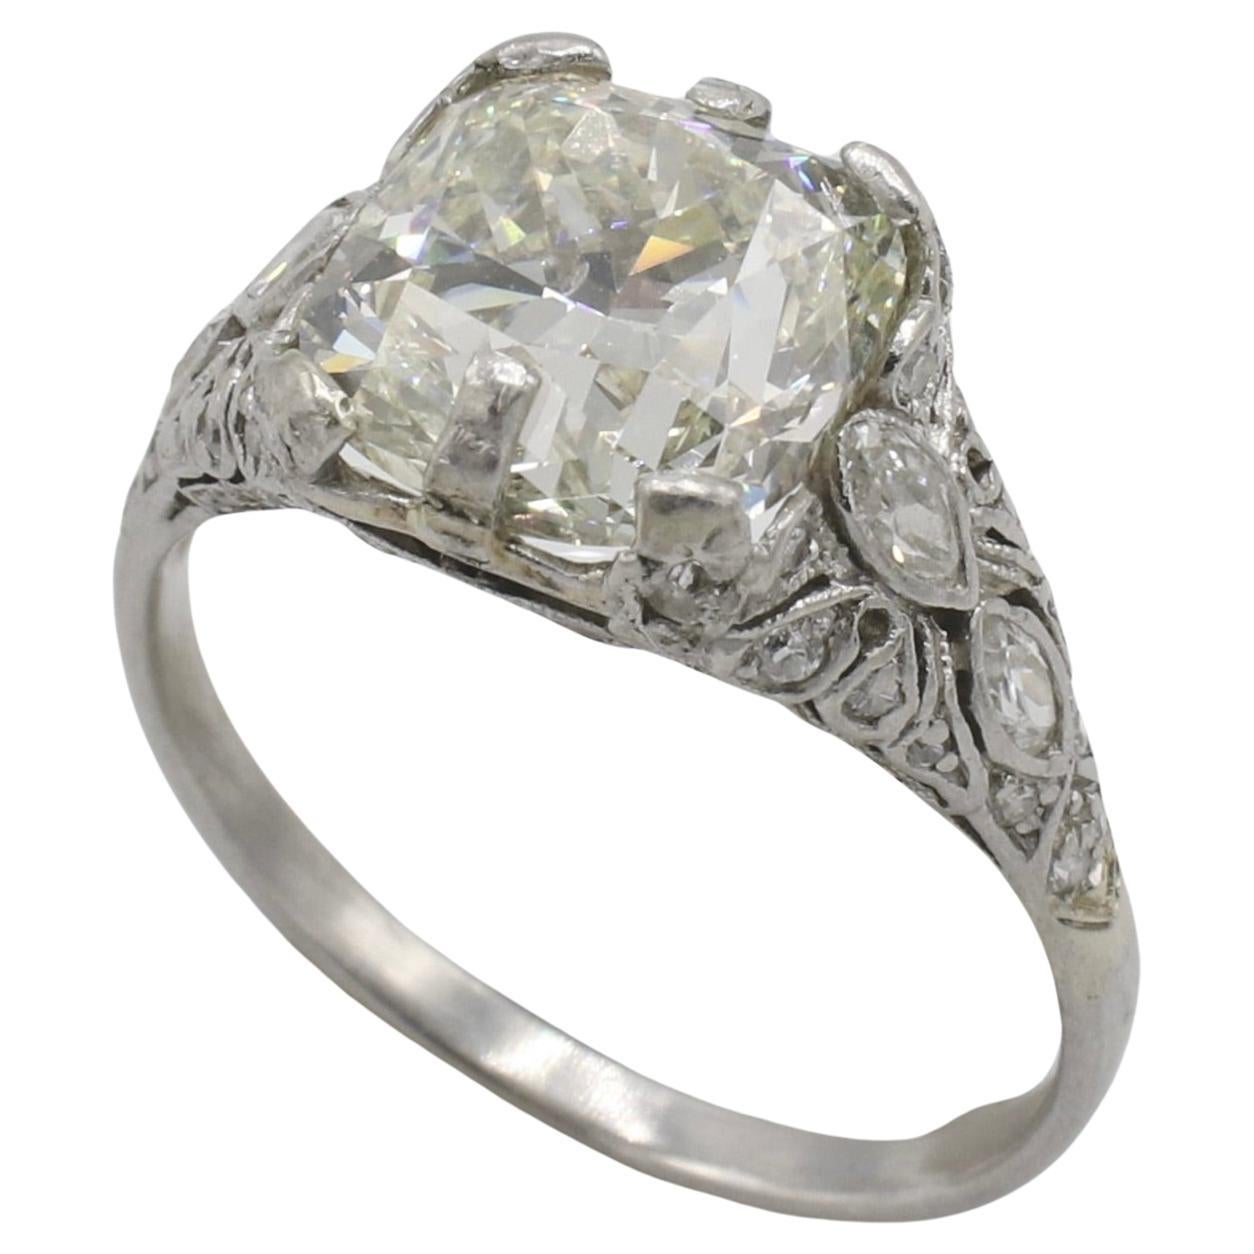 GIA Certified 4.03 Carat Cushion Natural Diamond Art Deco Engagement Ring
Metal: Platinum
Weight: 5.4 grams
GIA report number: 2231133161
Diamond: 4.03 carat cushion M VS2 natural diamond 
Accent diamonds: Marquise & round natural diamonds, approx.